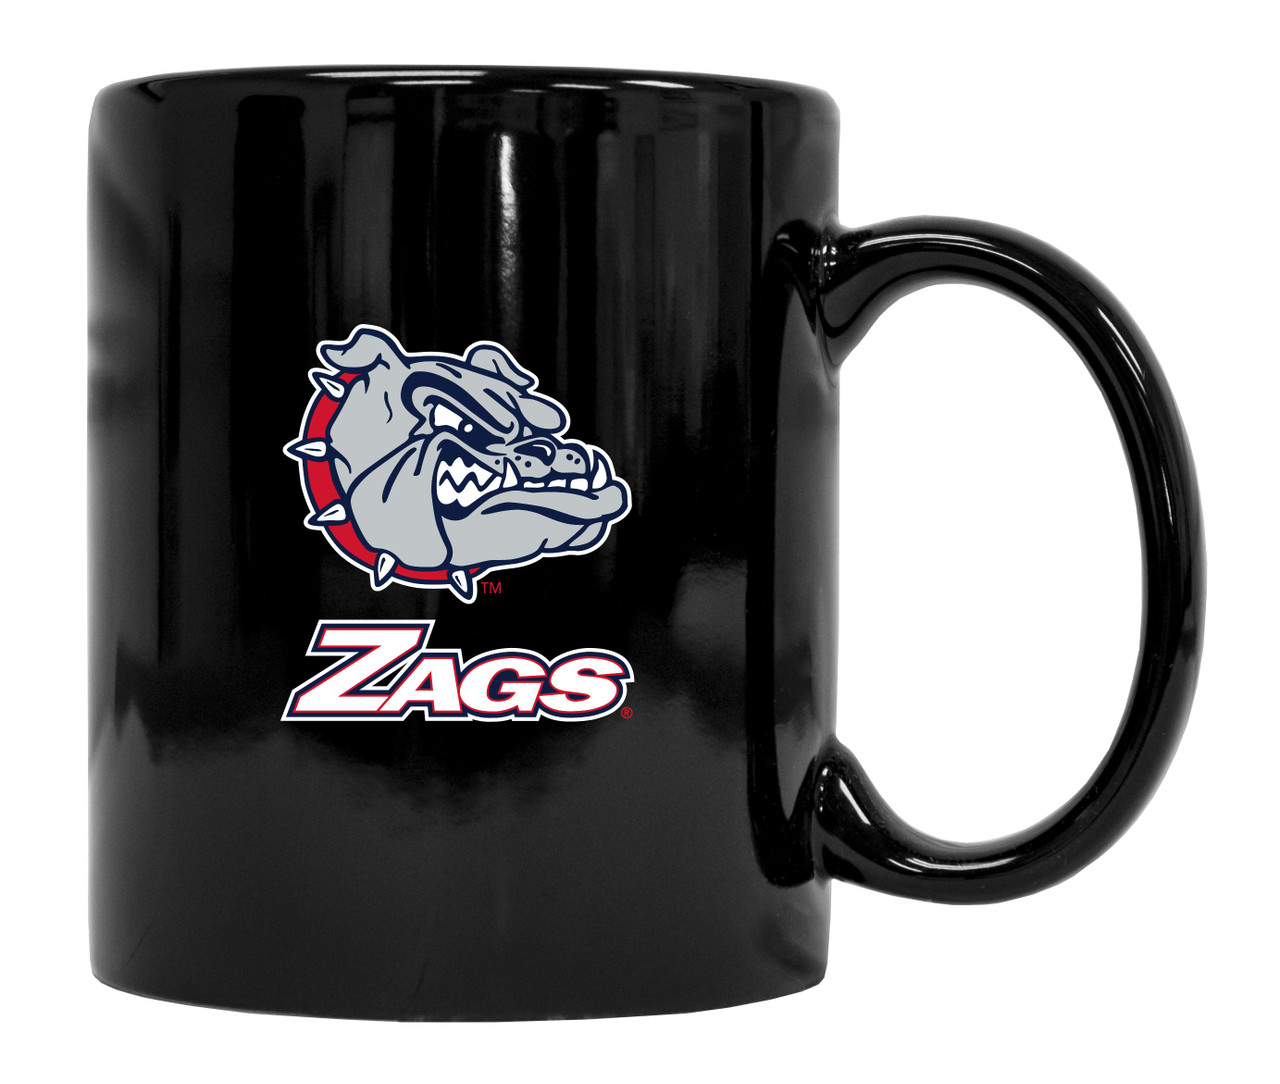 Gonzaga Bulldogs Black Ceramic Mug 2-Pack (Black).